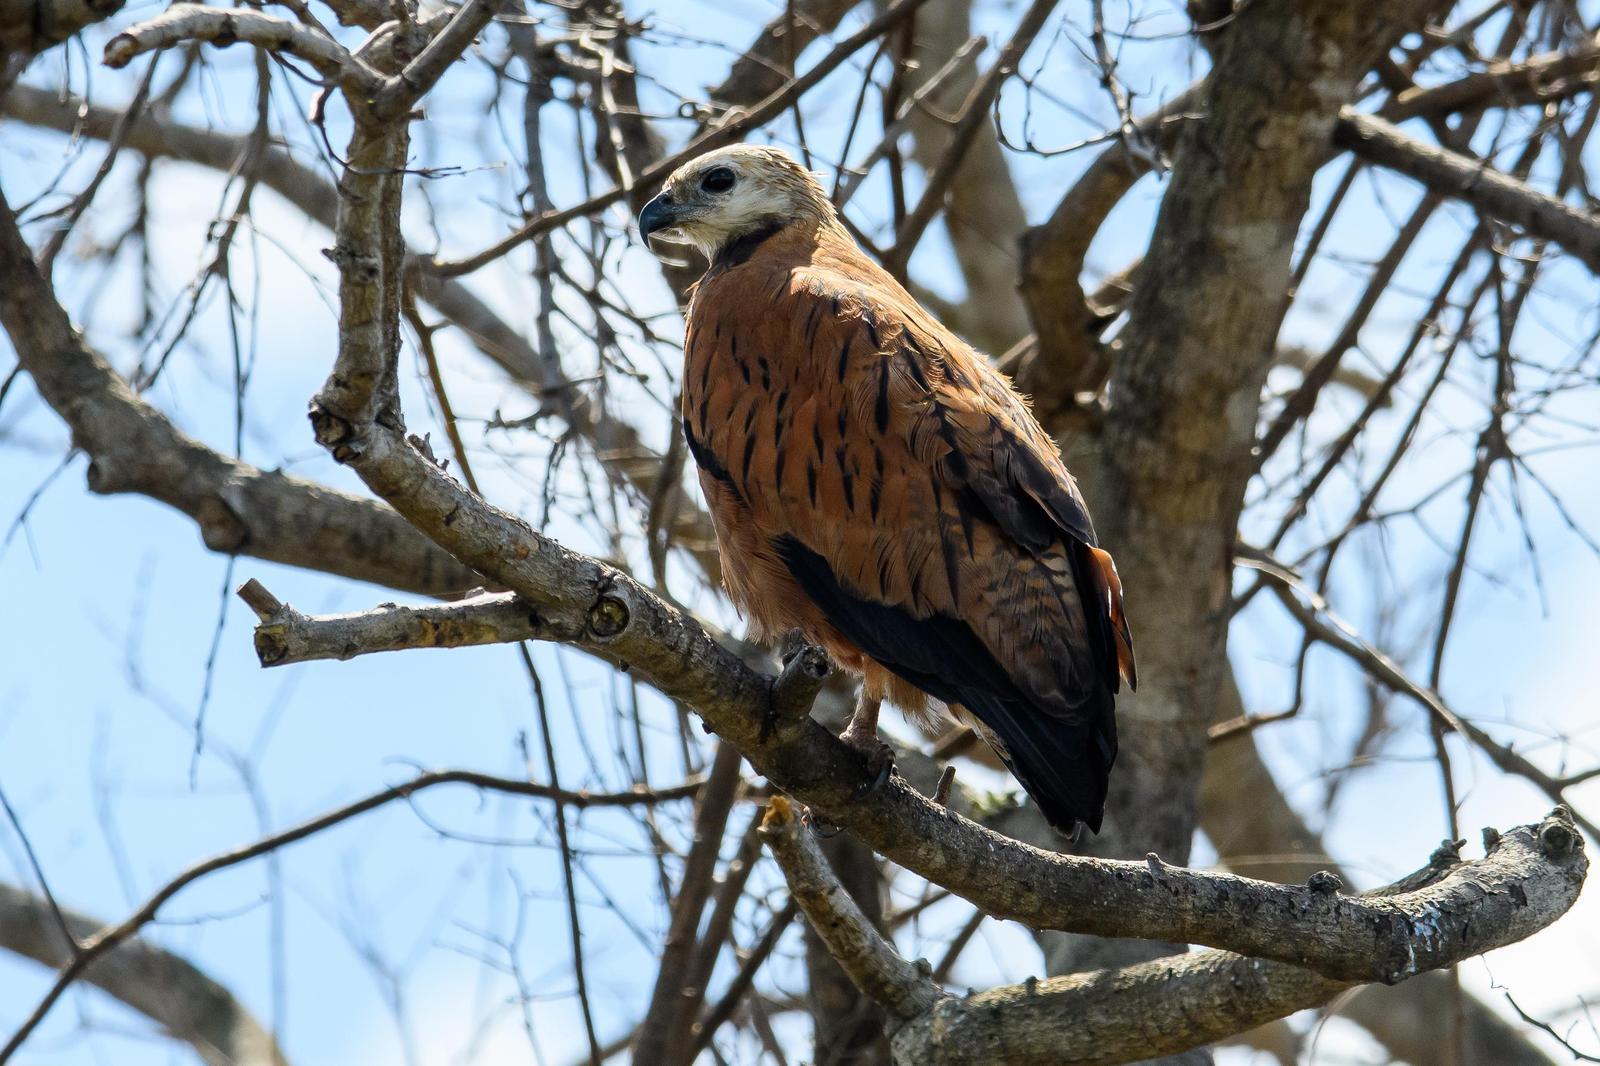 Black-collared Hawk Photo by Gerald Hoekstra